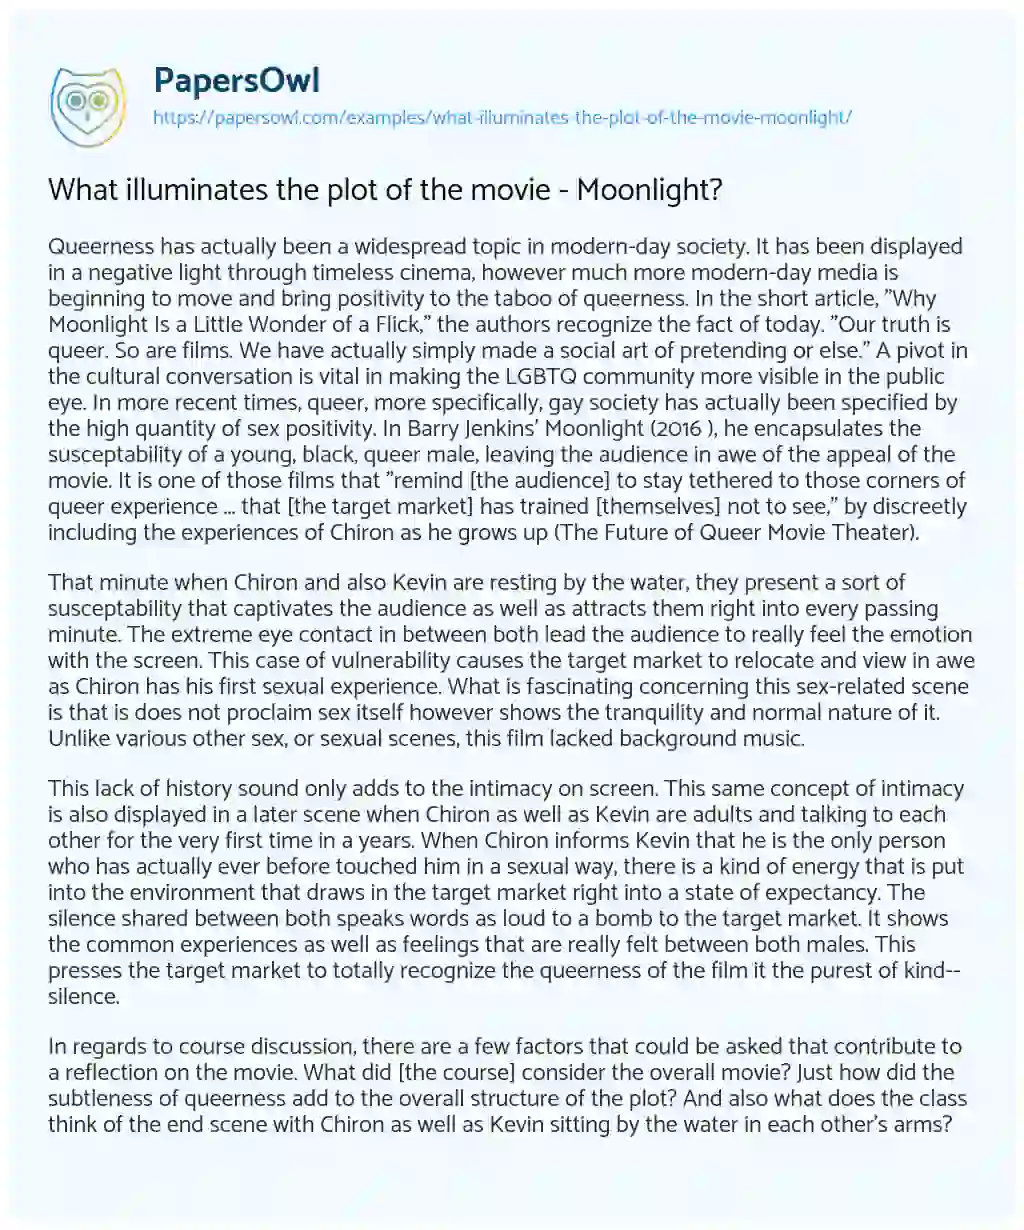 Essay on What Illuminates the Plot of the Movie – Moonlight?